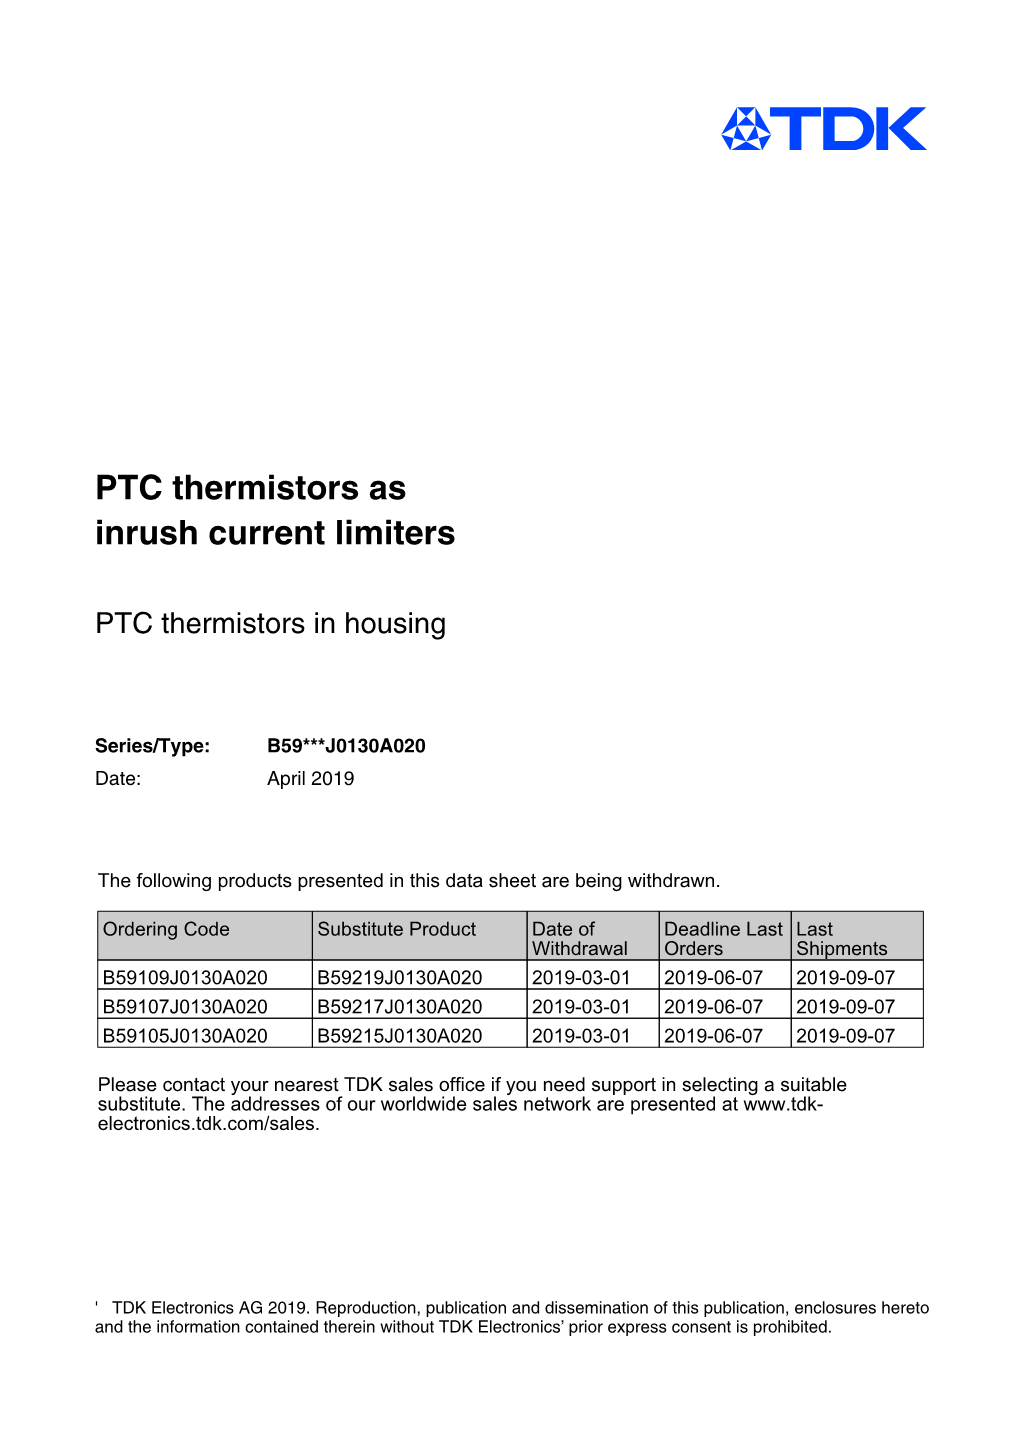 PTC Thermistors As Inrush Current Limiters